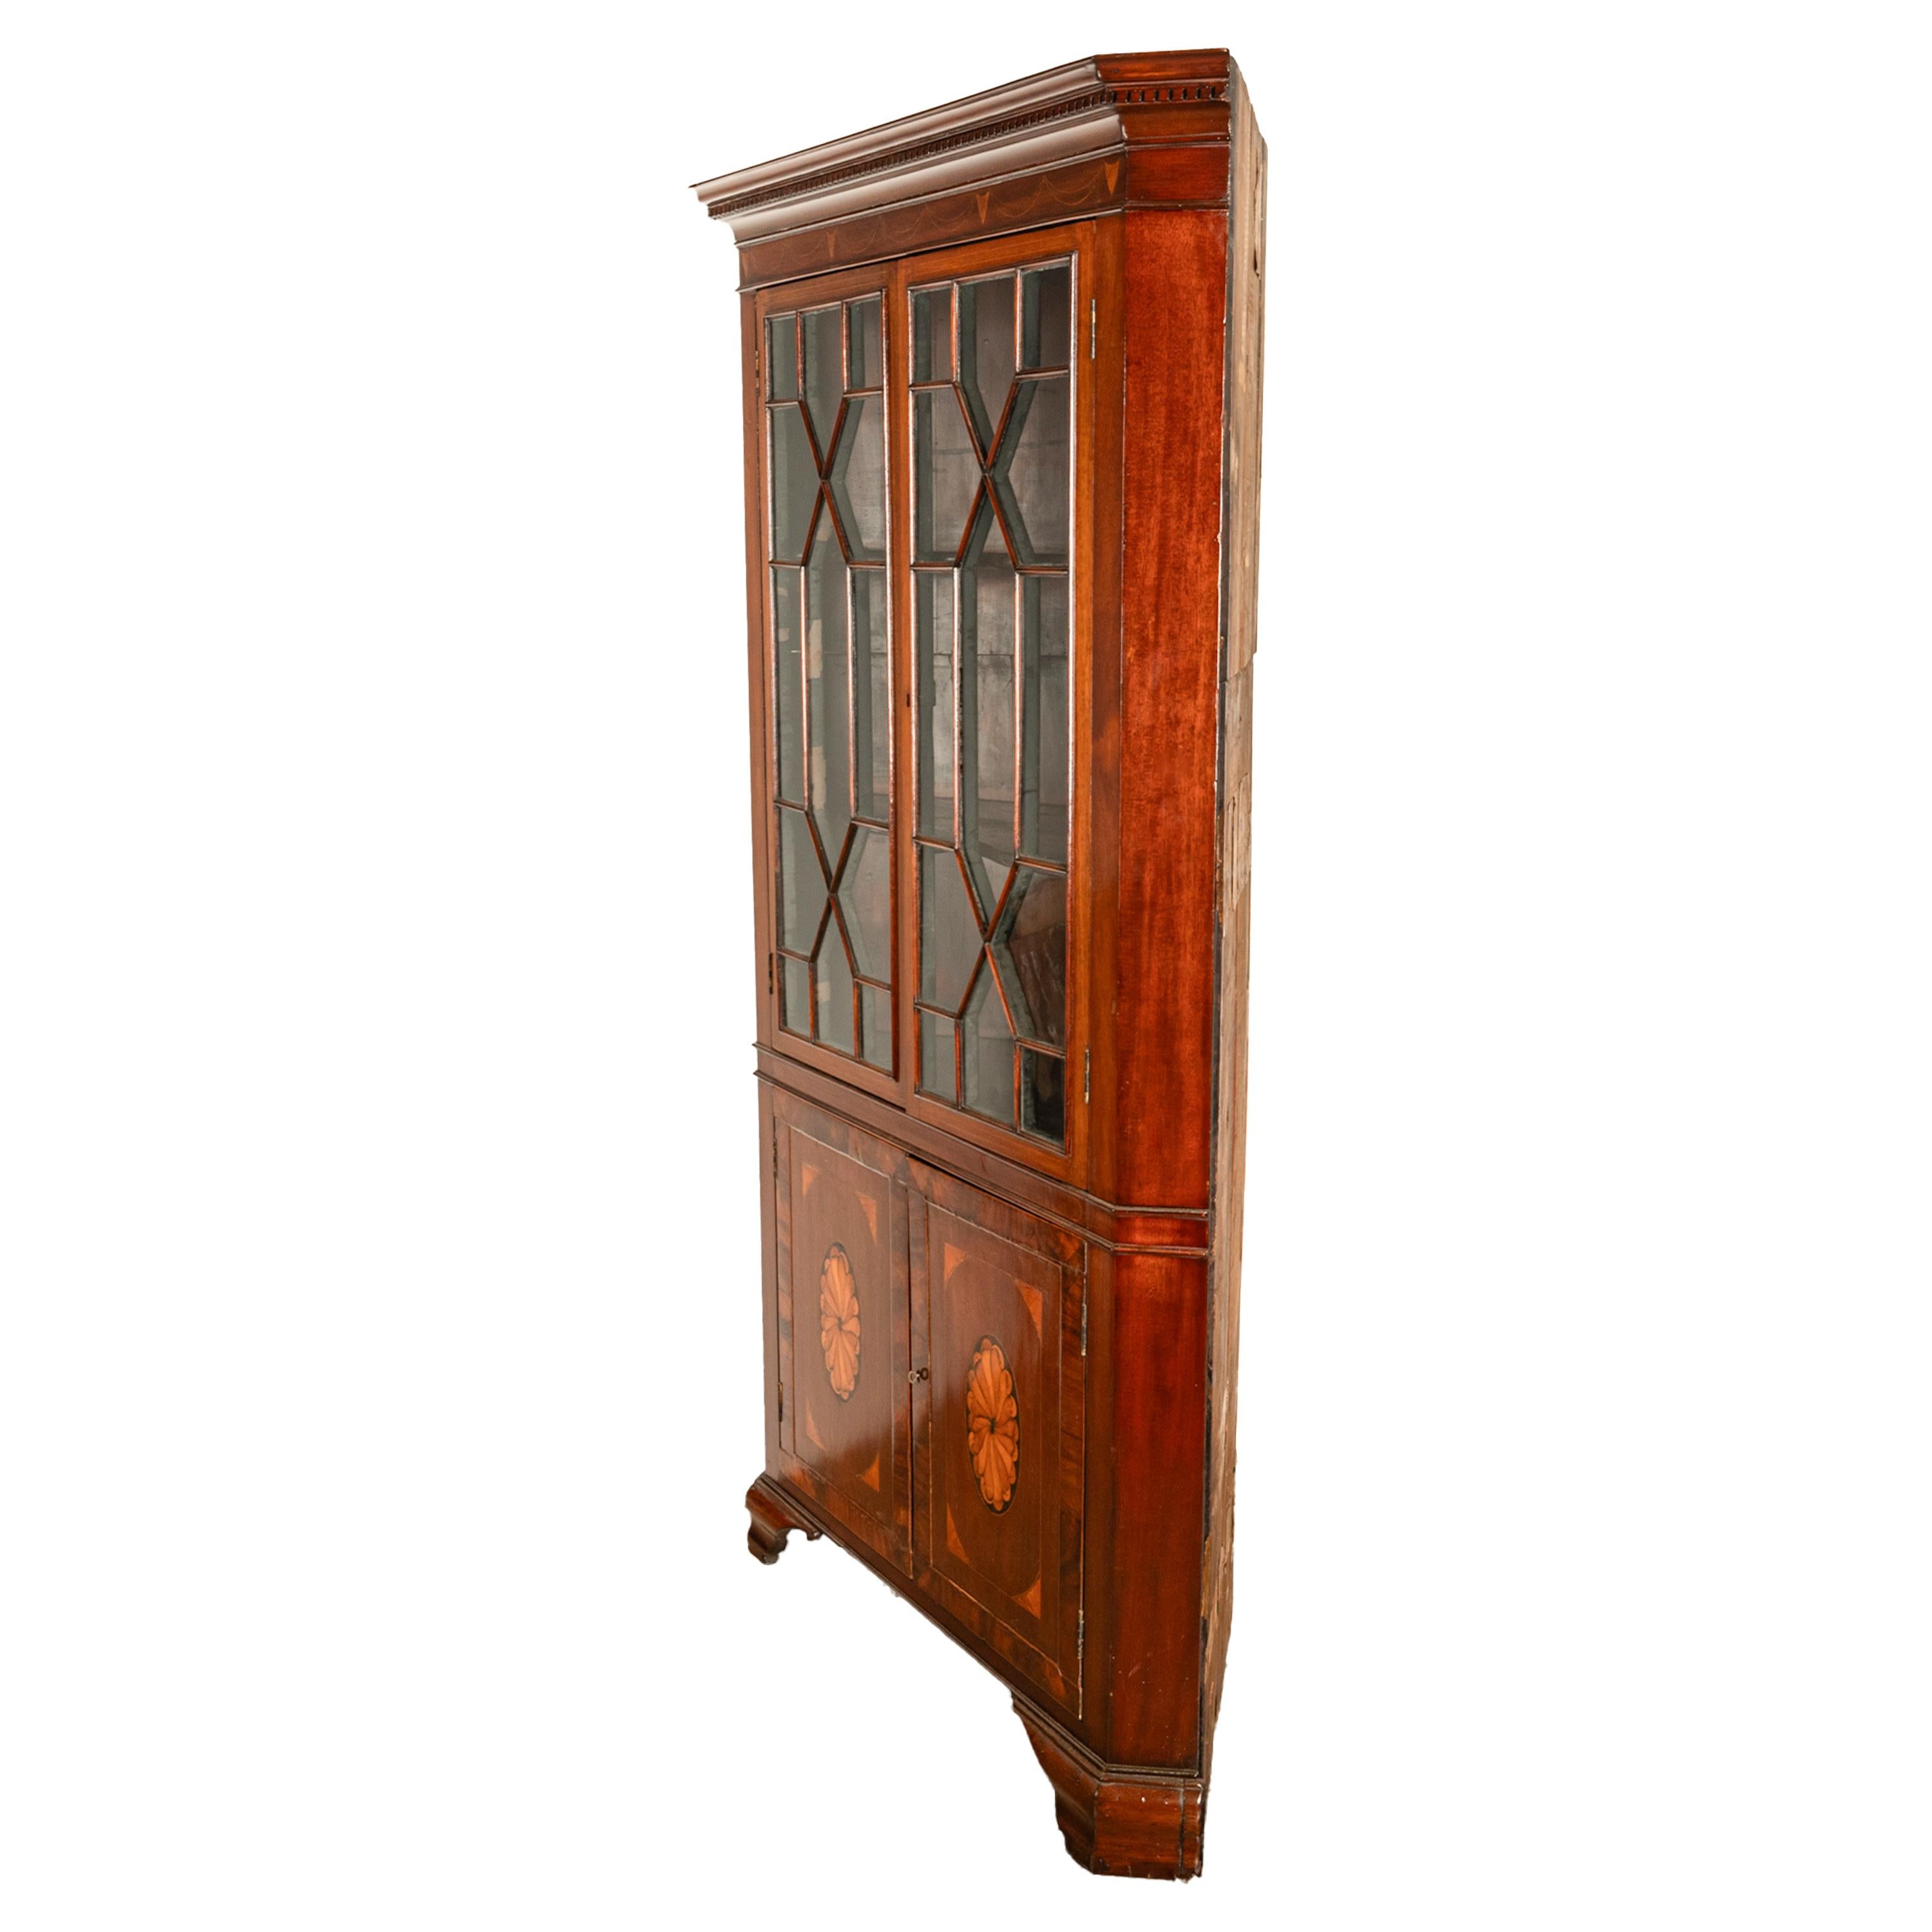 Antique 18th Century Georgian Inlaid Mahogany Freestanding Corner Cabinet 1790 For Sale 1